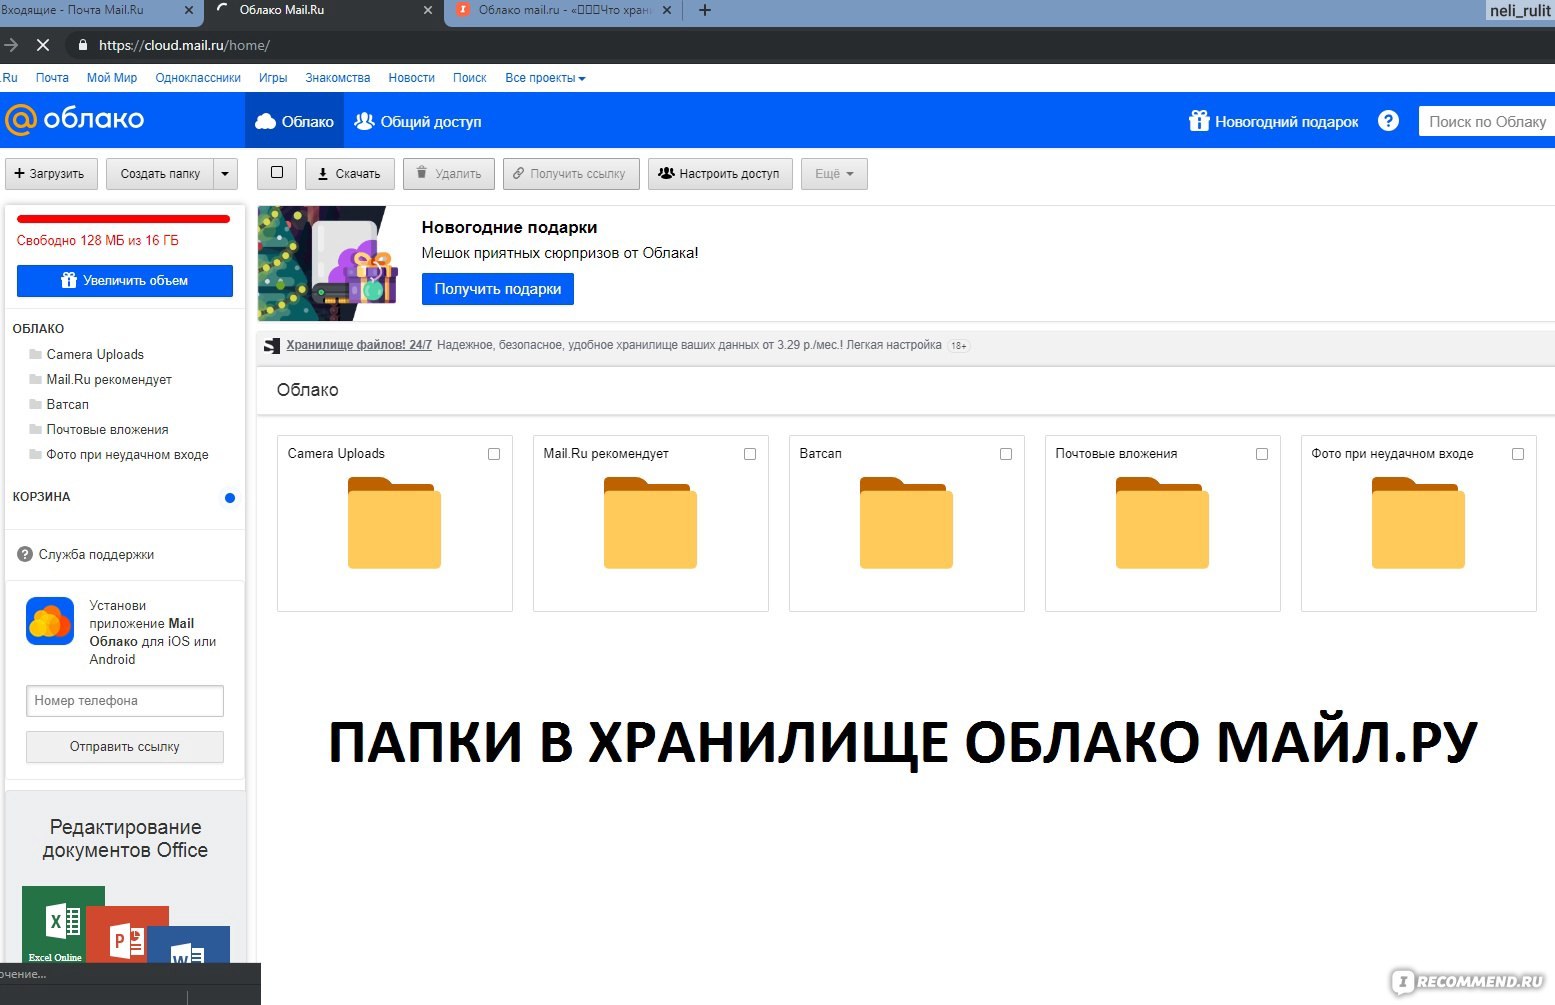 Mail.ru valintina nappi - Поиск порно